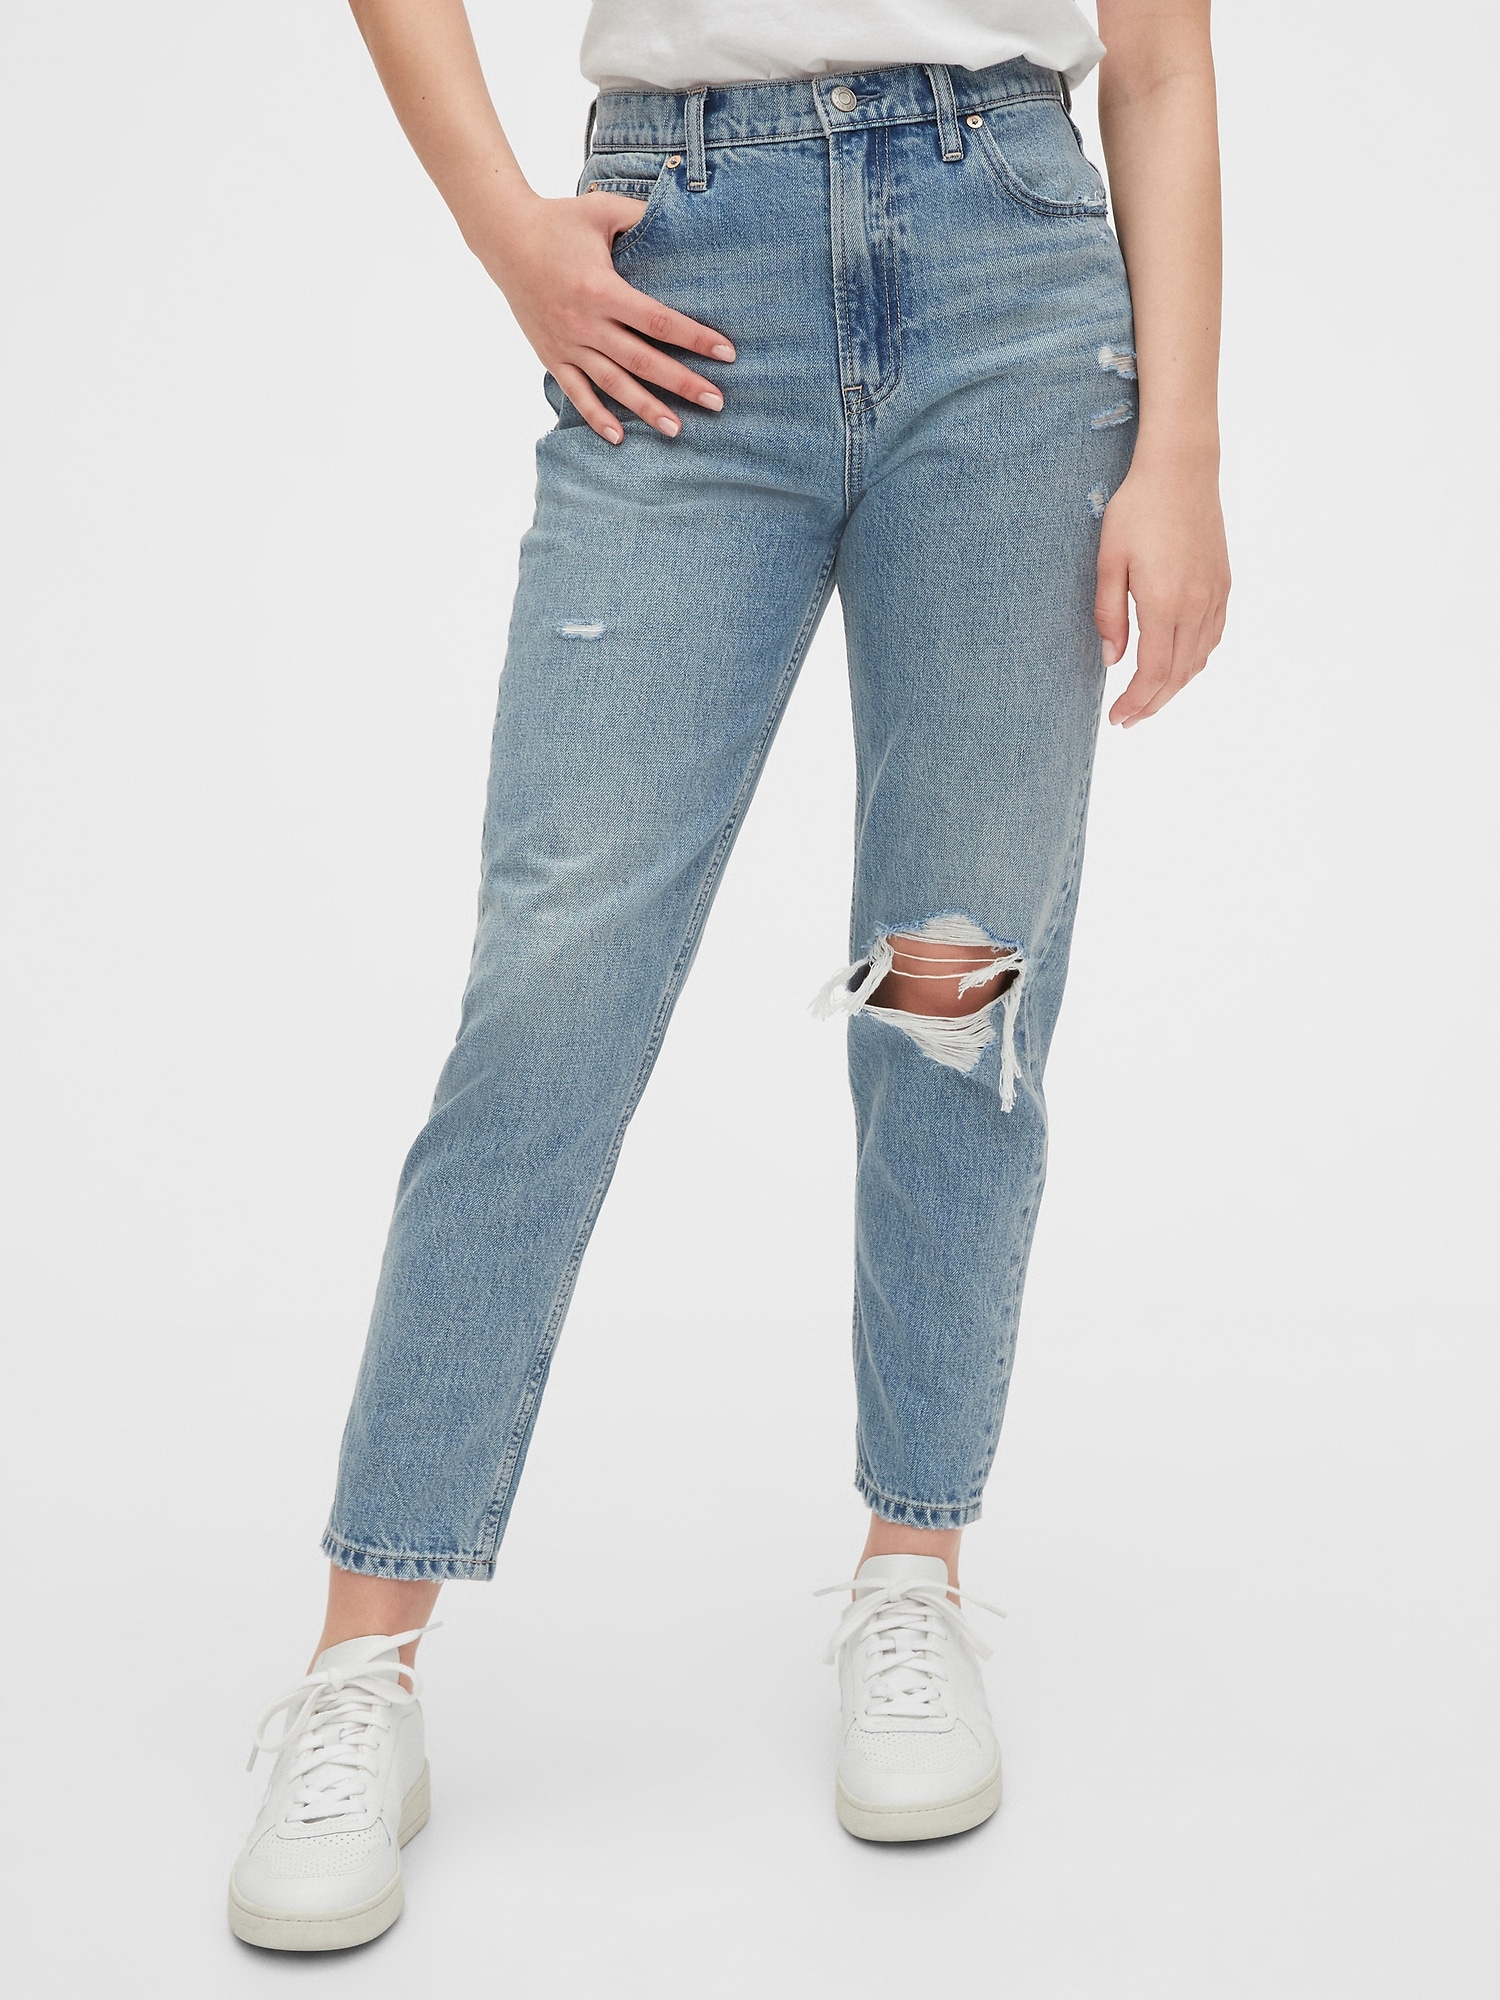 high rise mom jeans gap